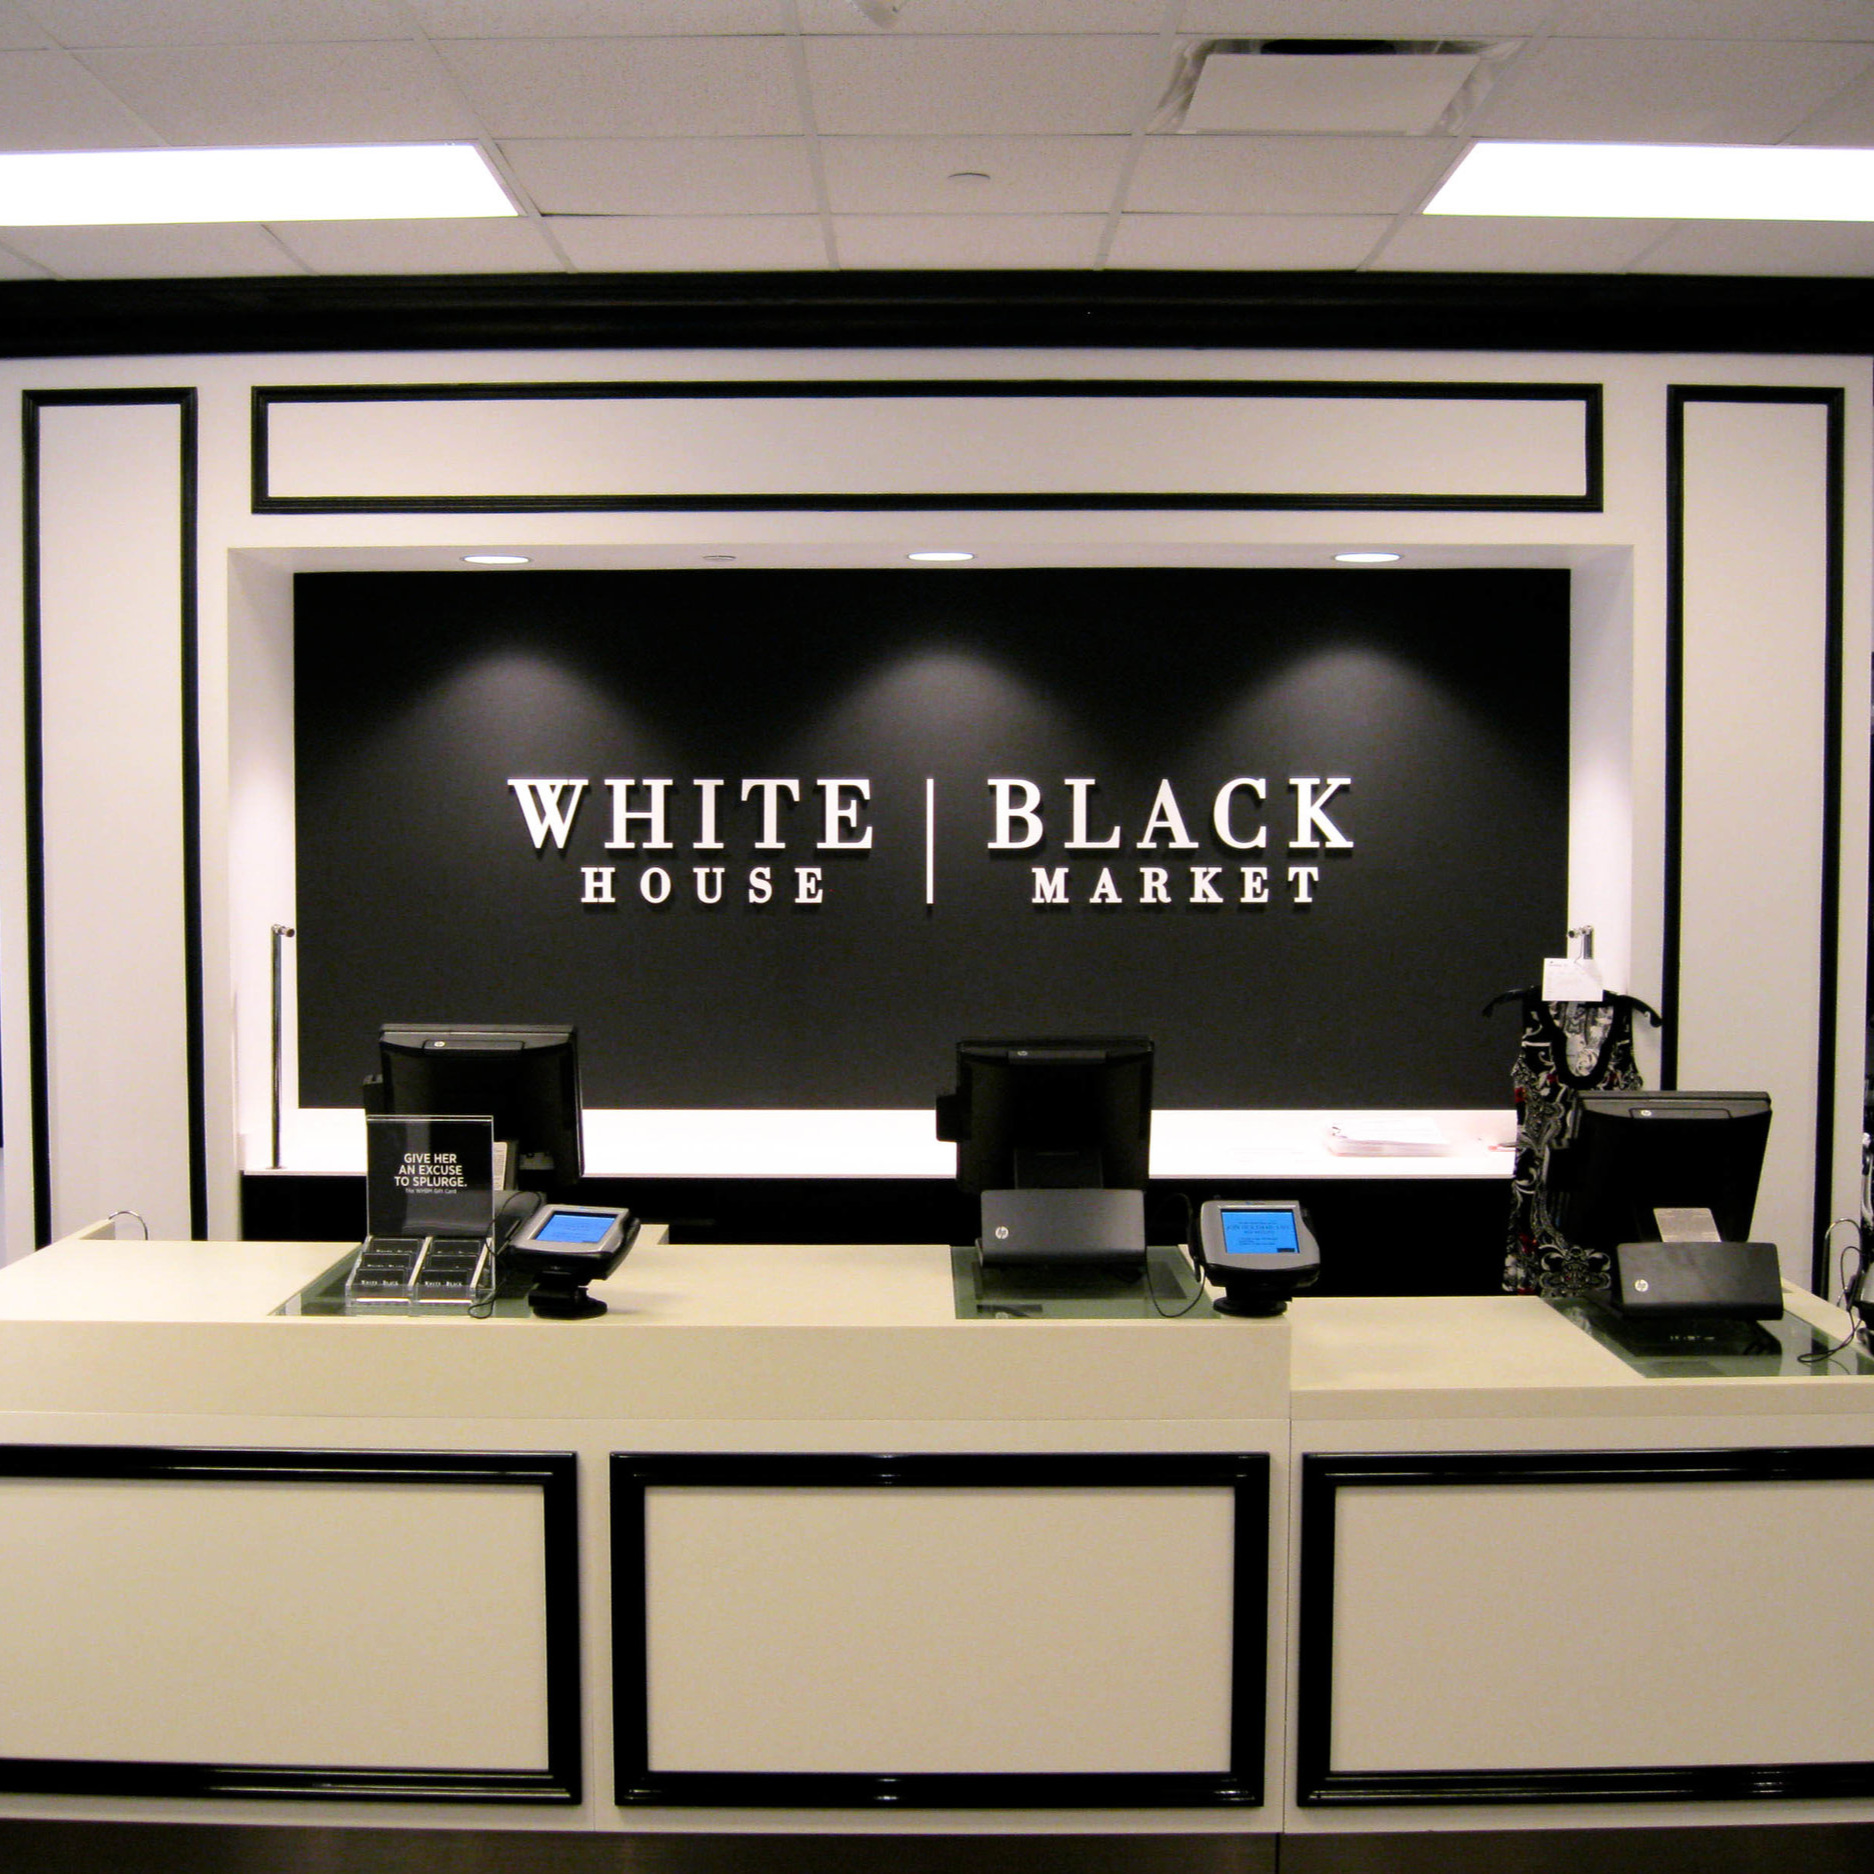  WHITE HOUSE | BLACK MARKET  Since 2007 